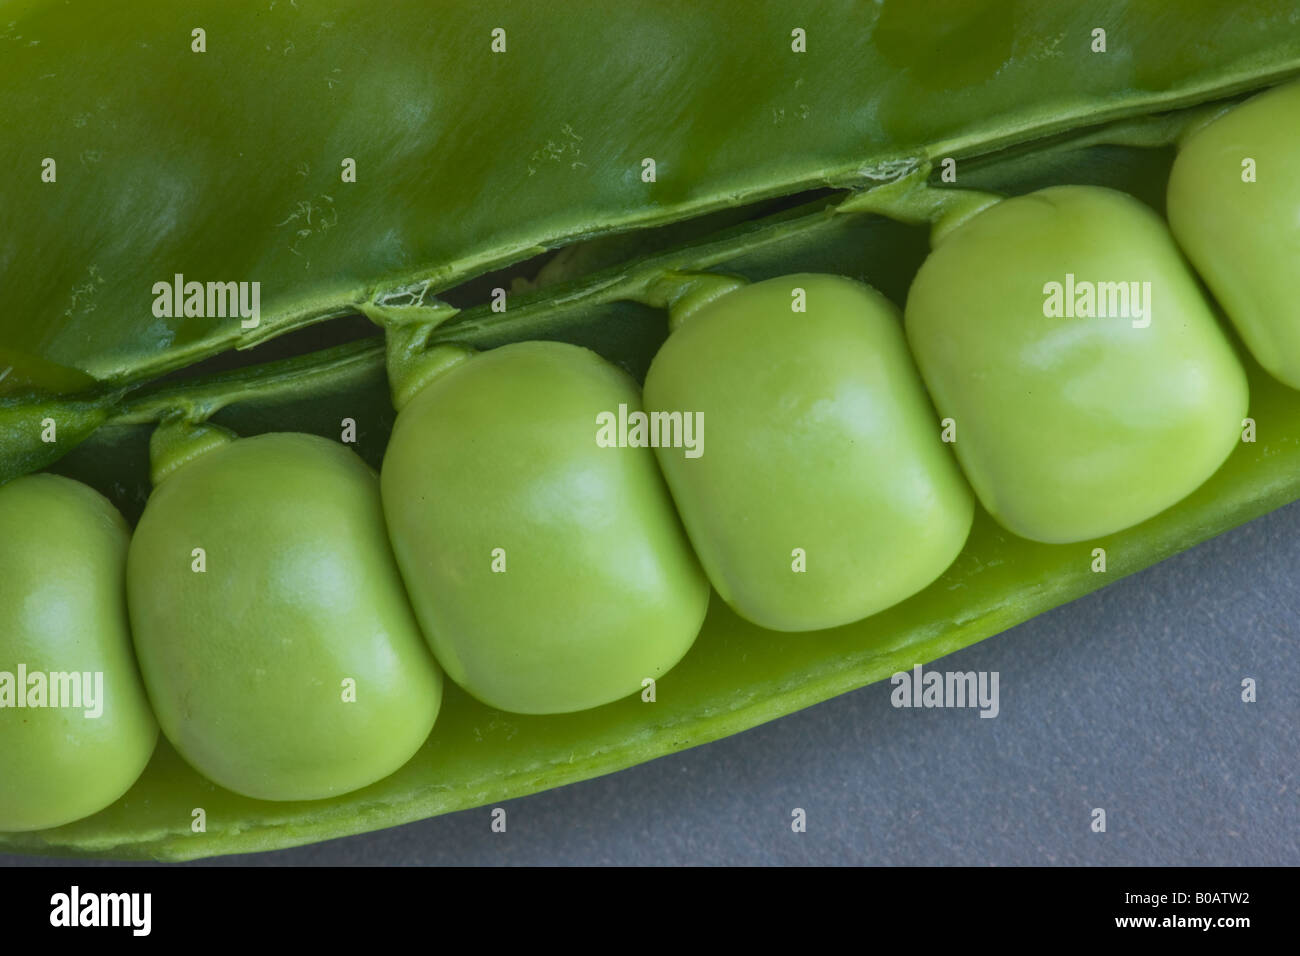 Green Peas in open pod. Stock Photo